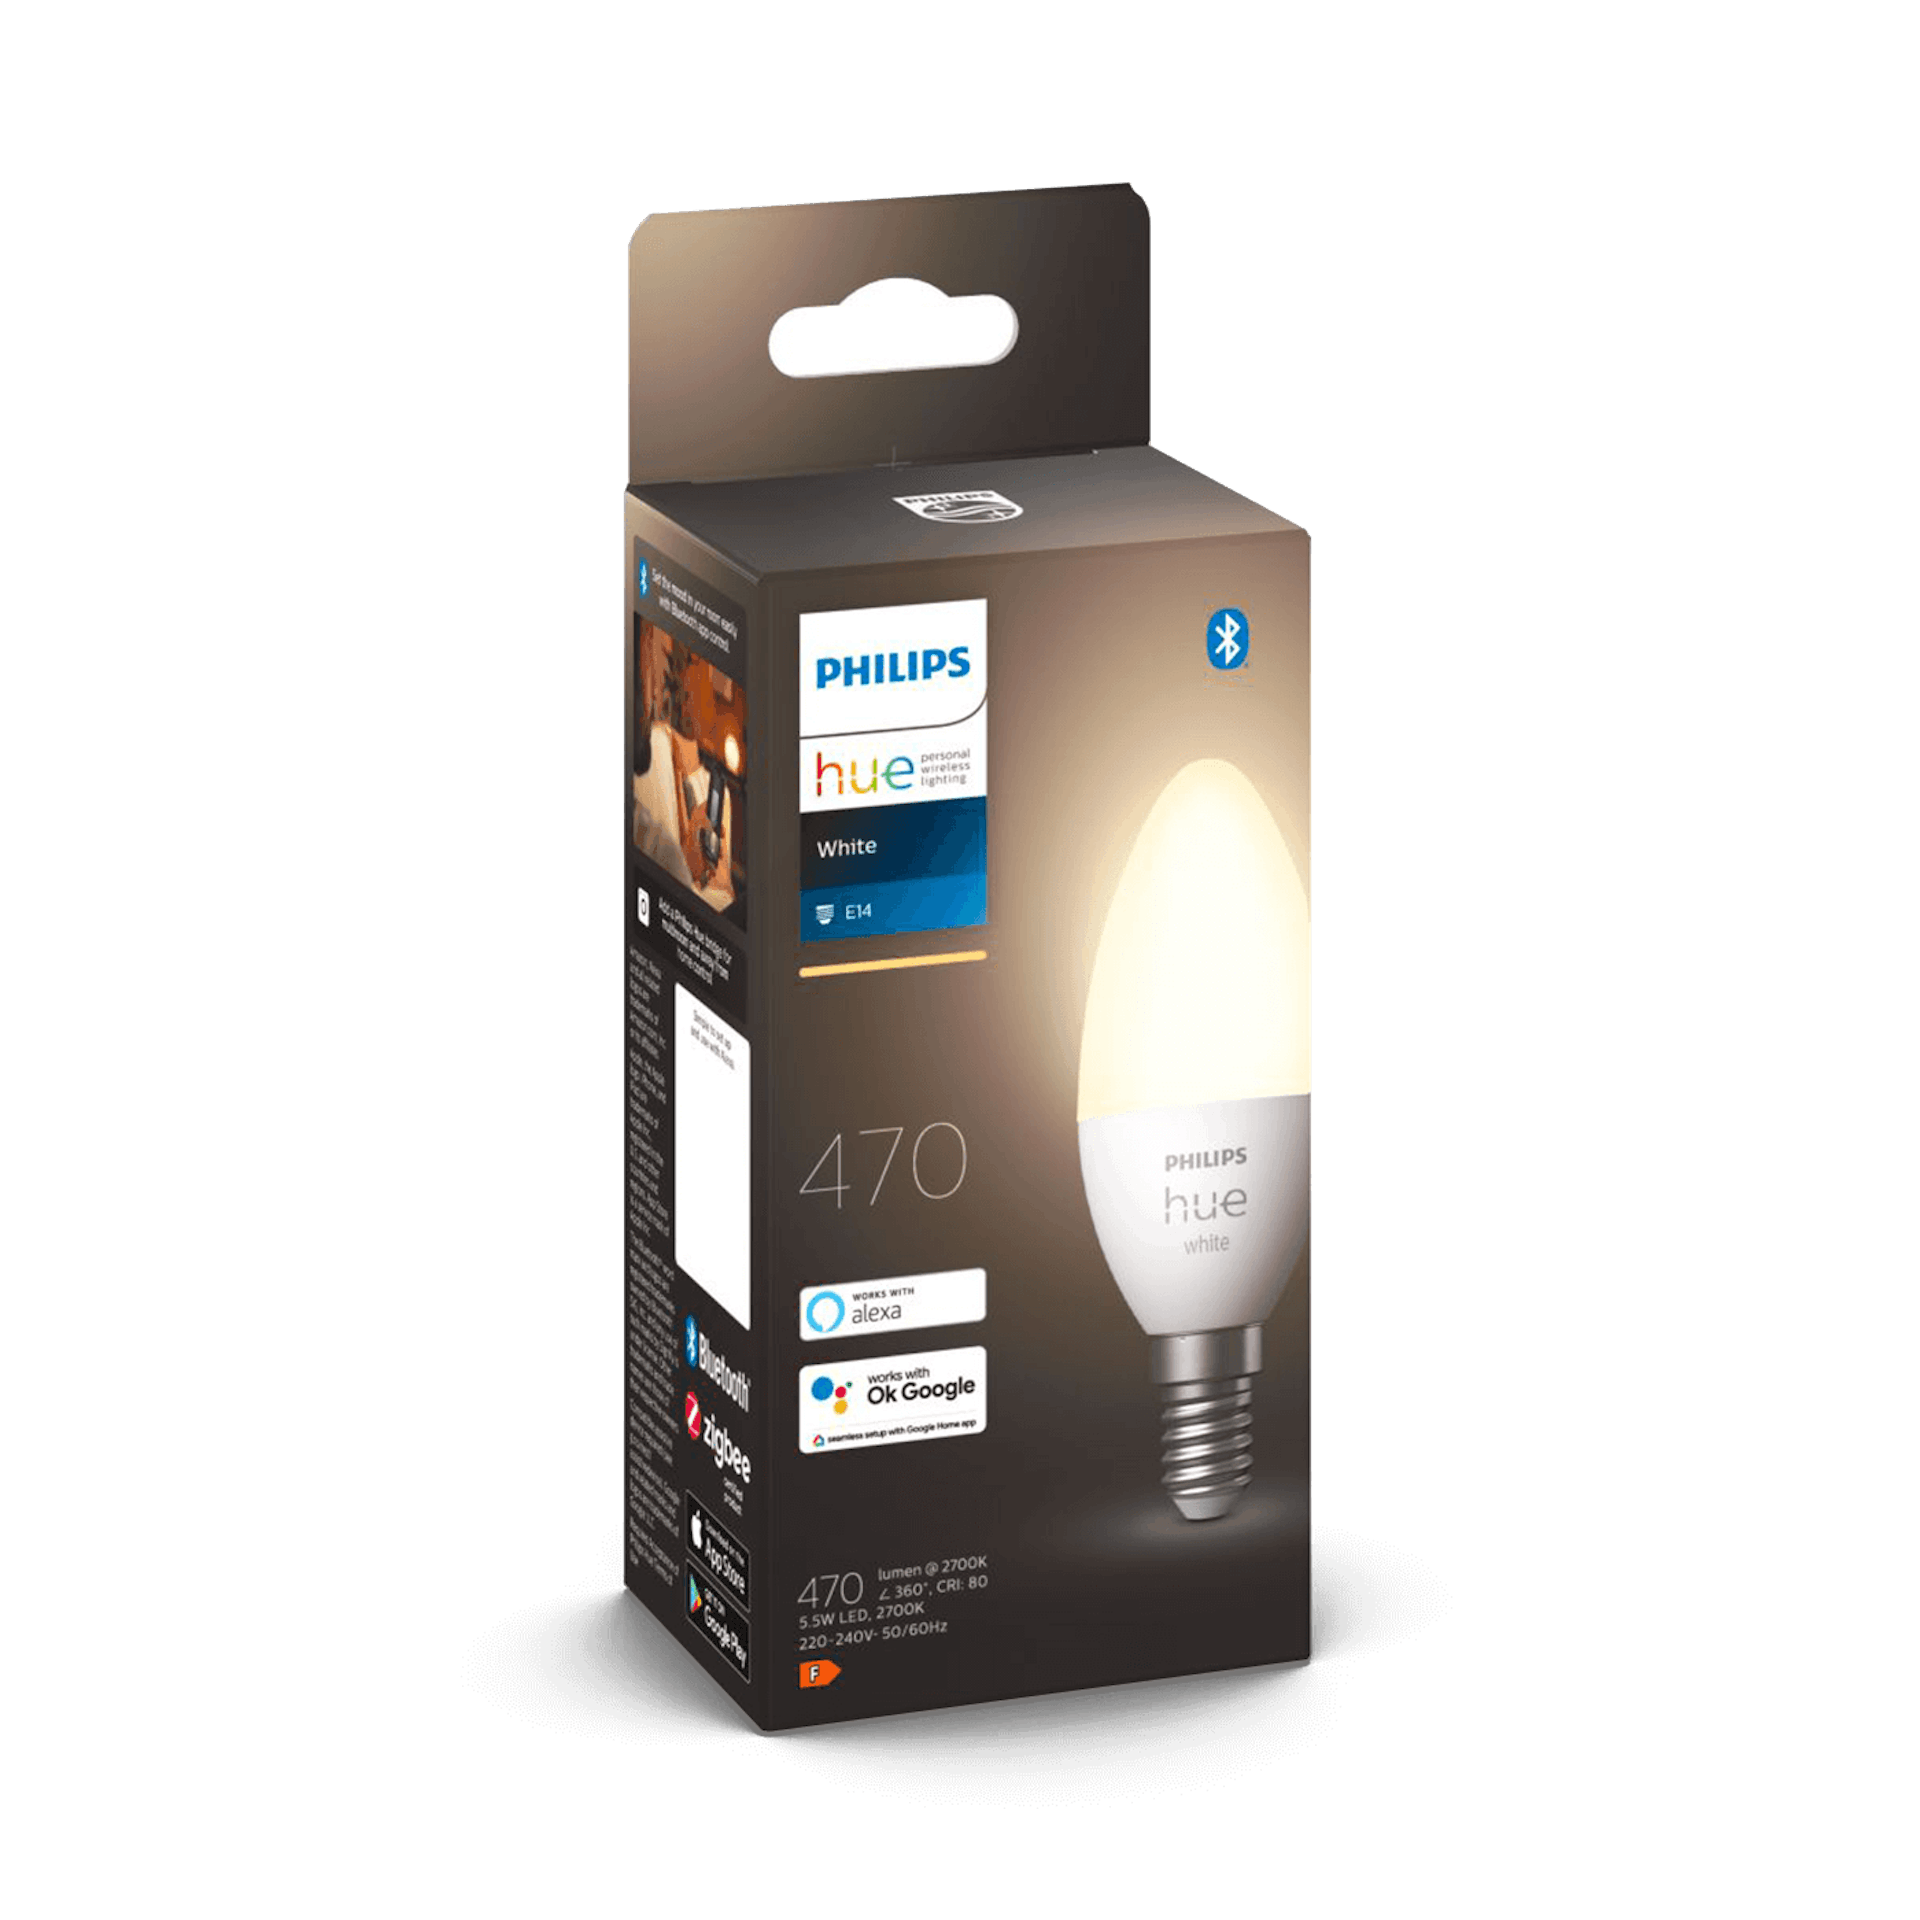 Philips Hue White E14 (G2) - Details - Packaging image